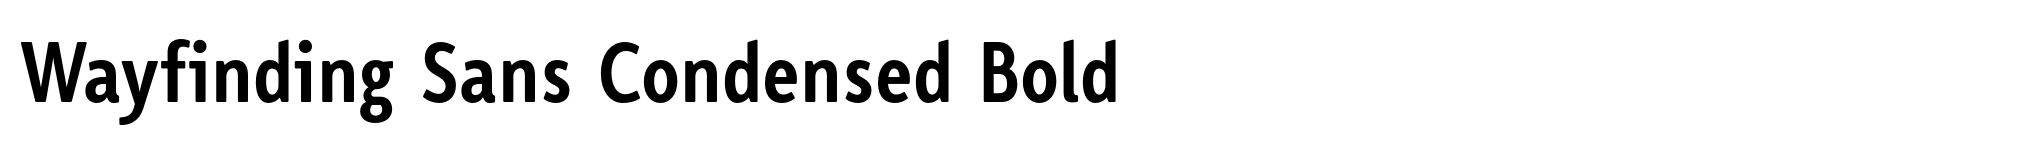 Wayfinding Sans Condensed Bold image